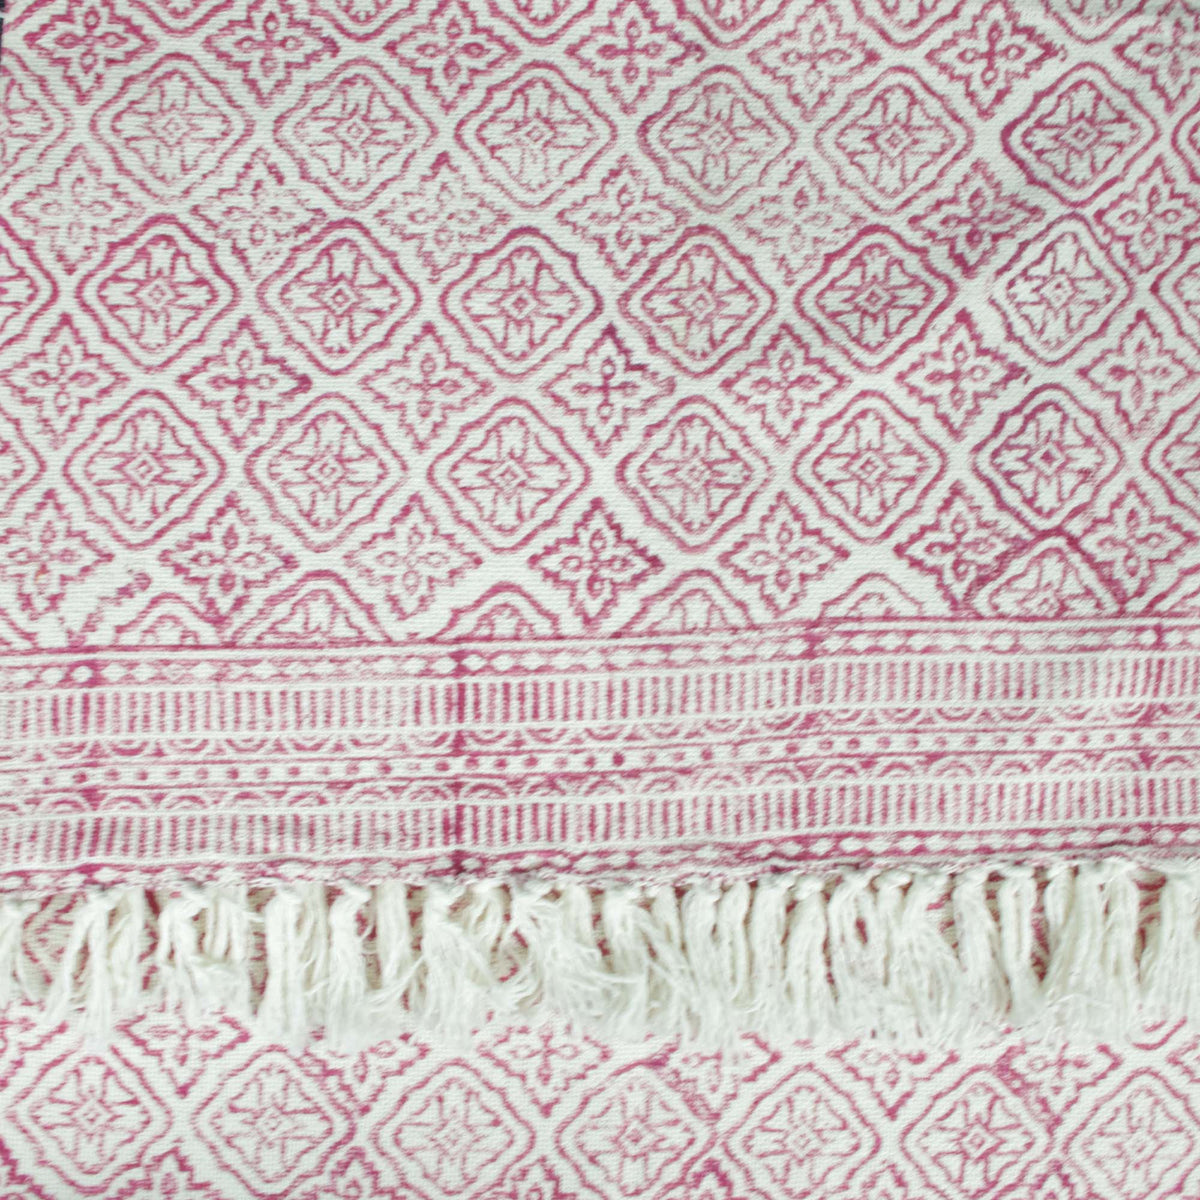 Block Printed Handloom Cotton Sofa Throw With Tassels -  Pink White Geometric